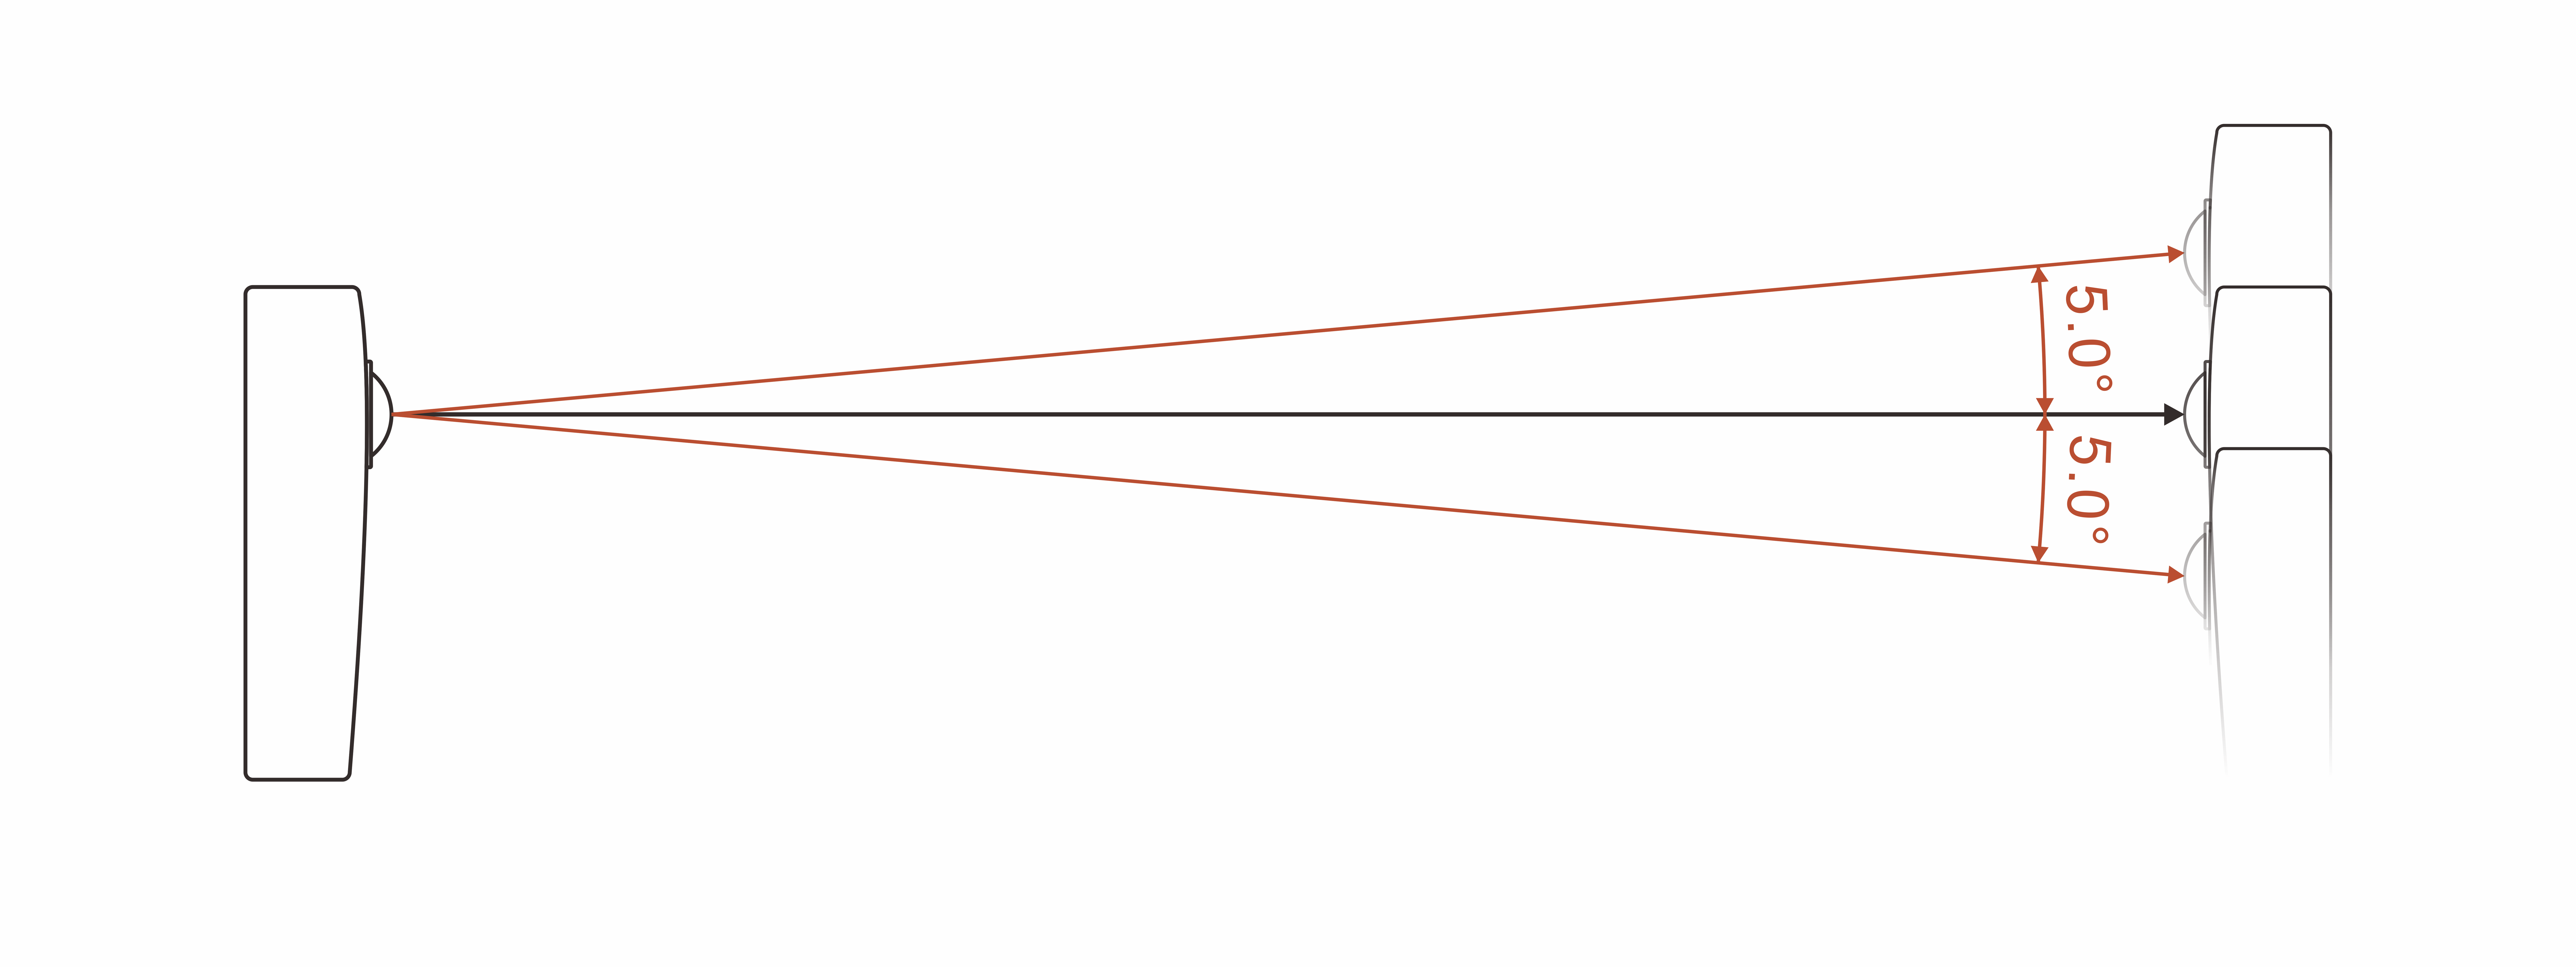 Photocell detection angle